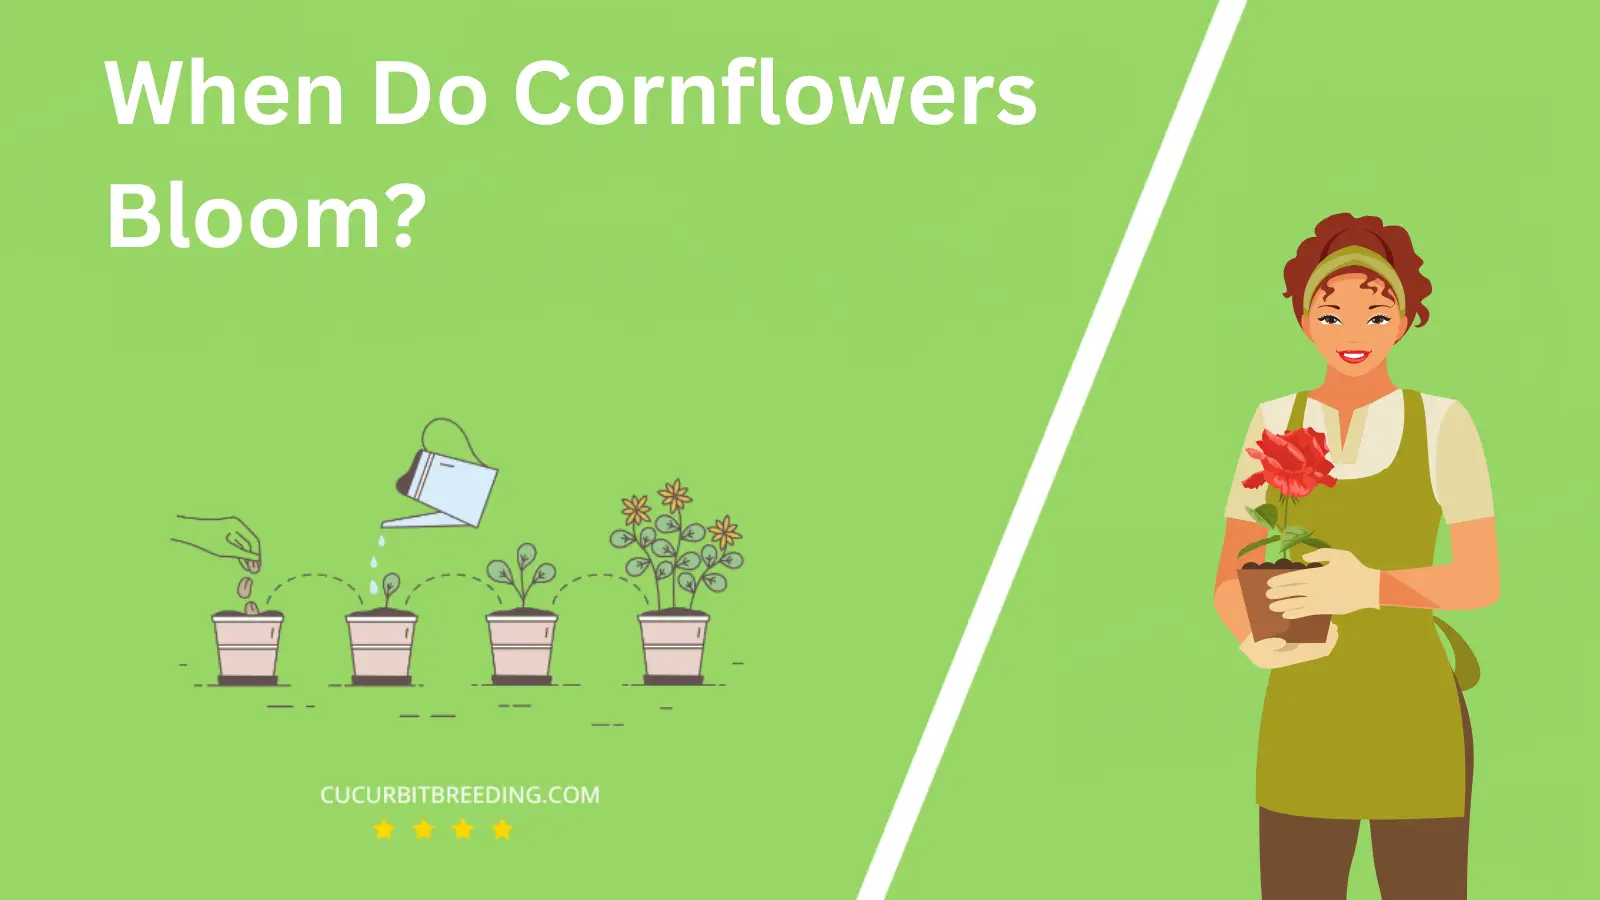 When Do Cornflowers Bloom?